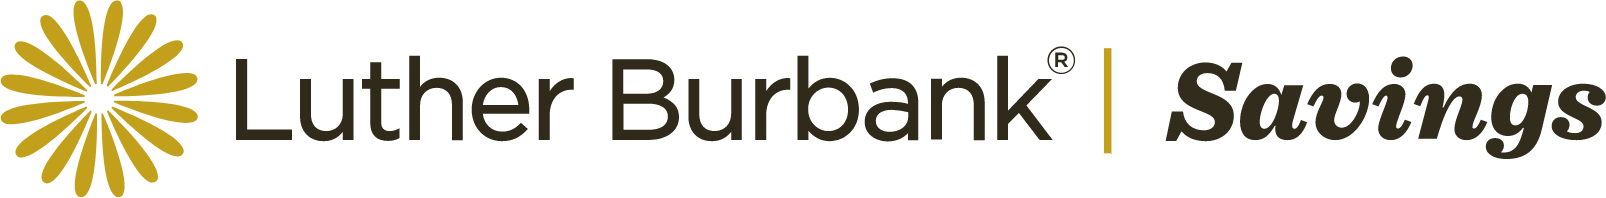 Luther Burbank logo large (transparent PNG)